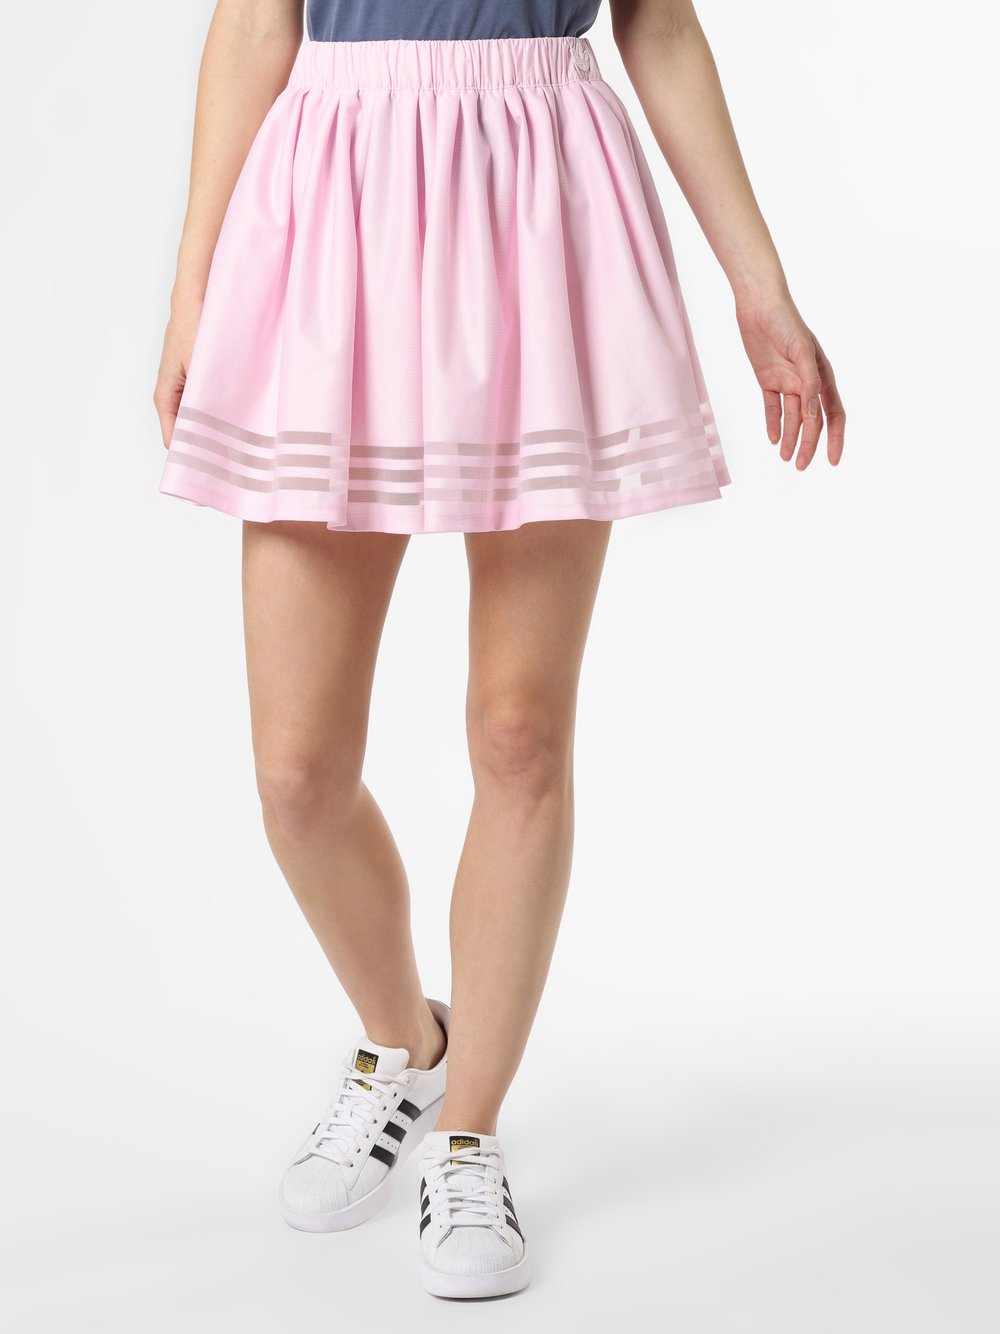 Adidas Originals - Spódnica damska, różowy